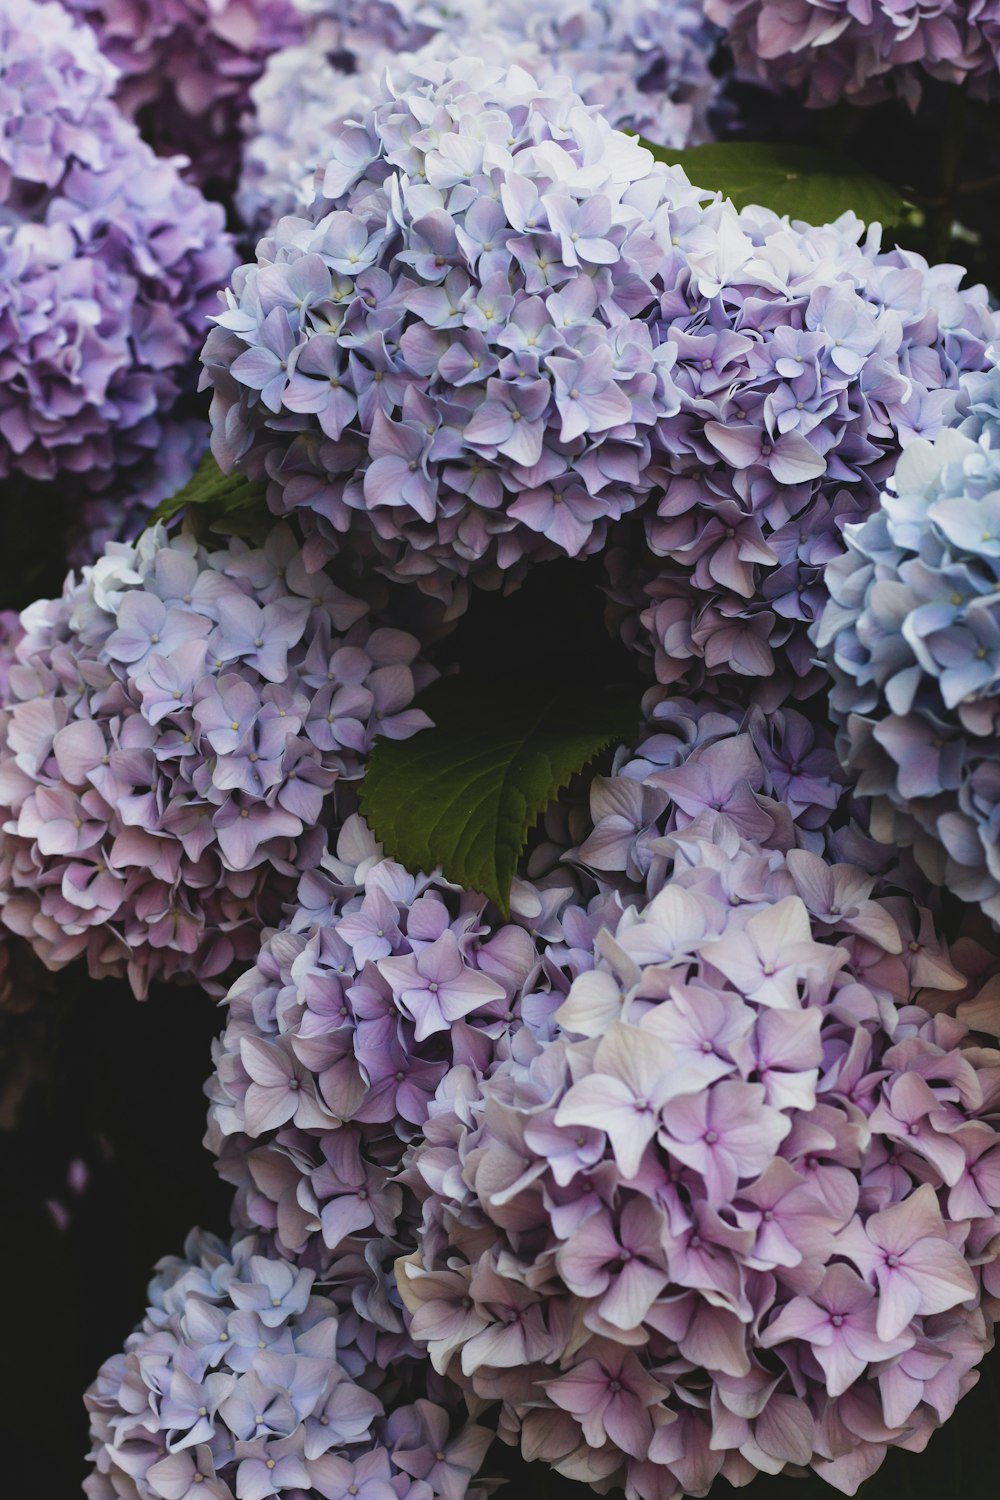 purple and white hydrangeas in bloom